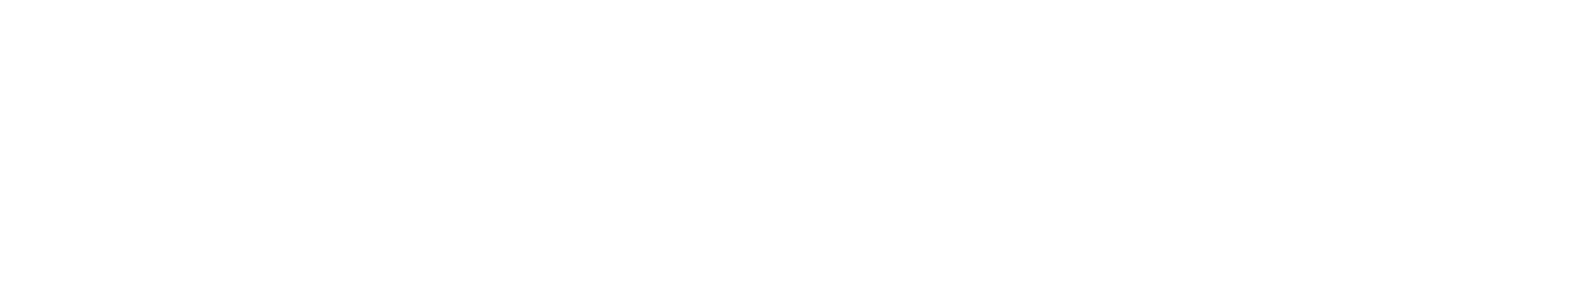 Gambling.com Group logo large for dark backgrounds (transparent PNG)